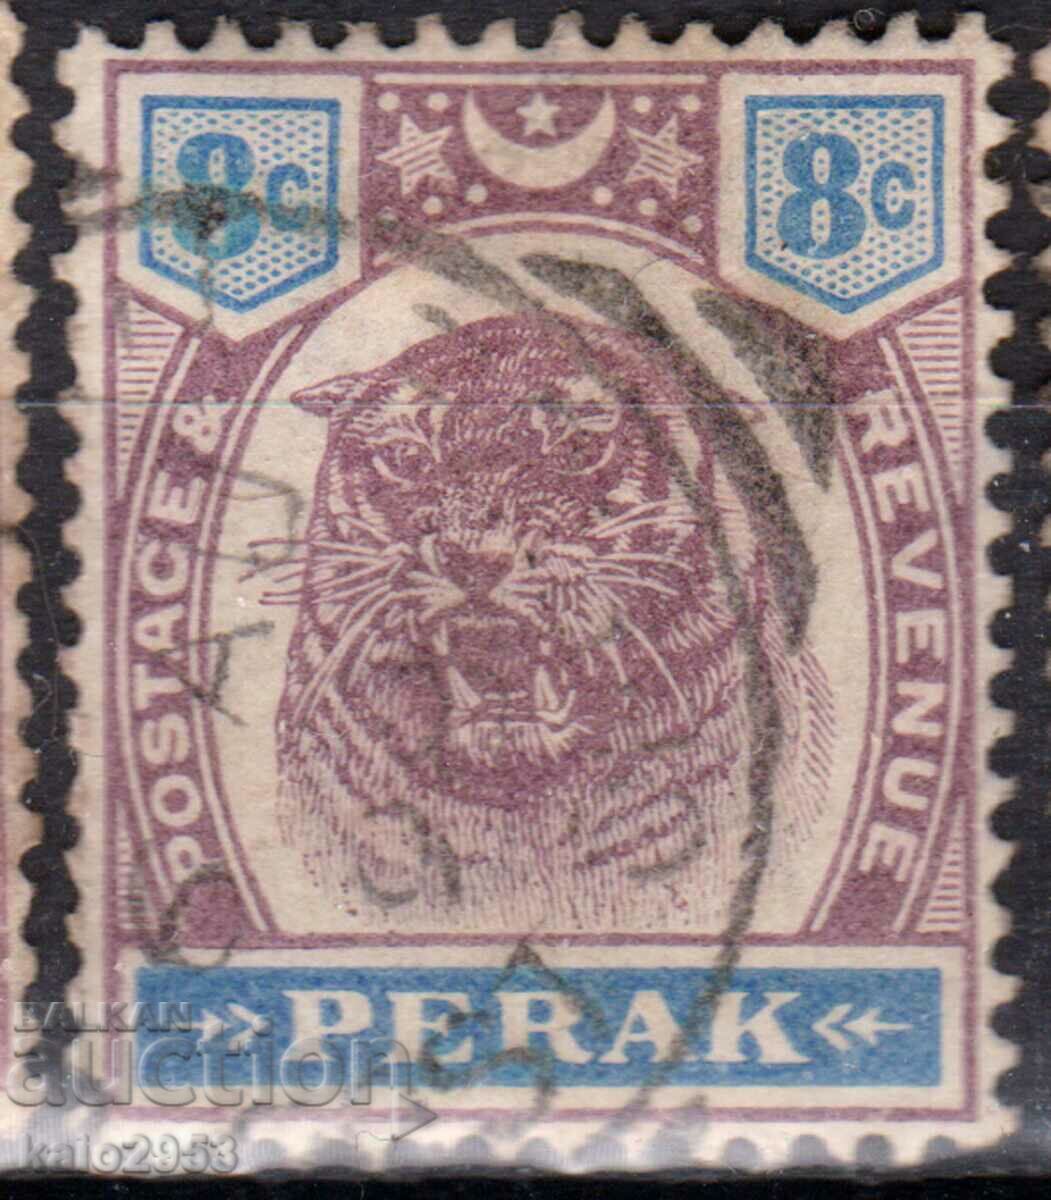 GB/Malaya/Perak-1895-classic.stamp-tiger's head, stamp